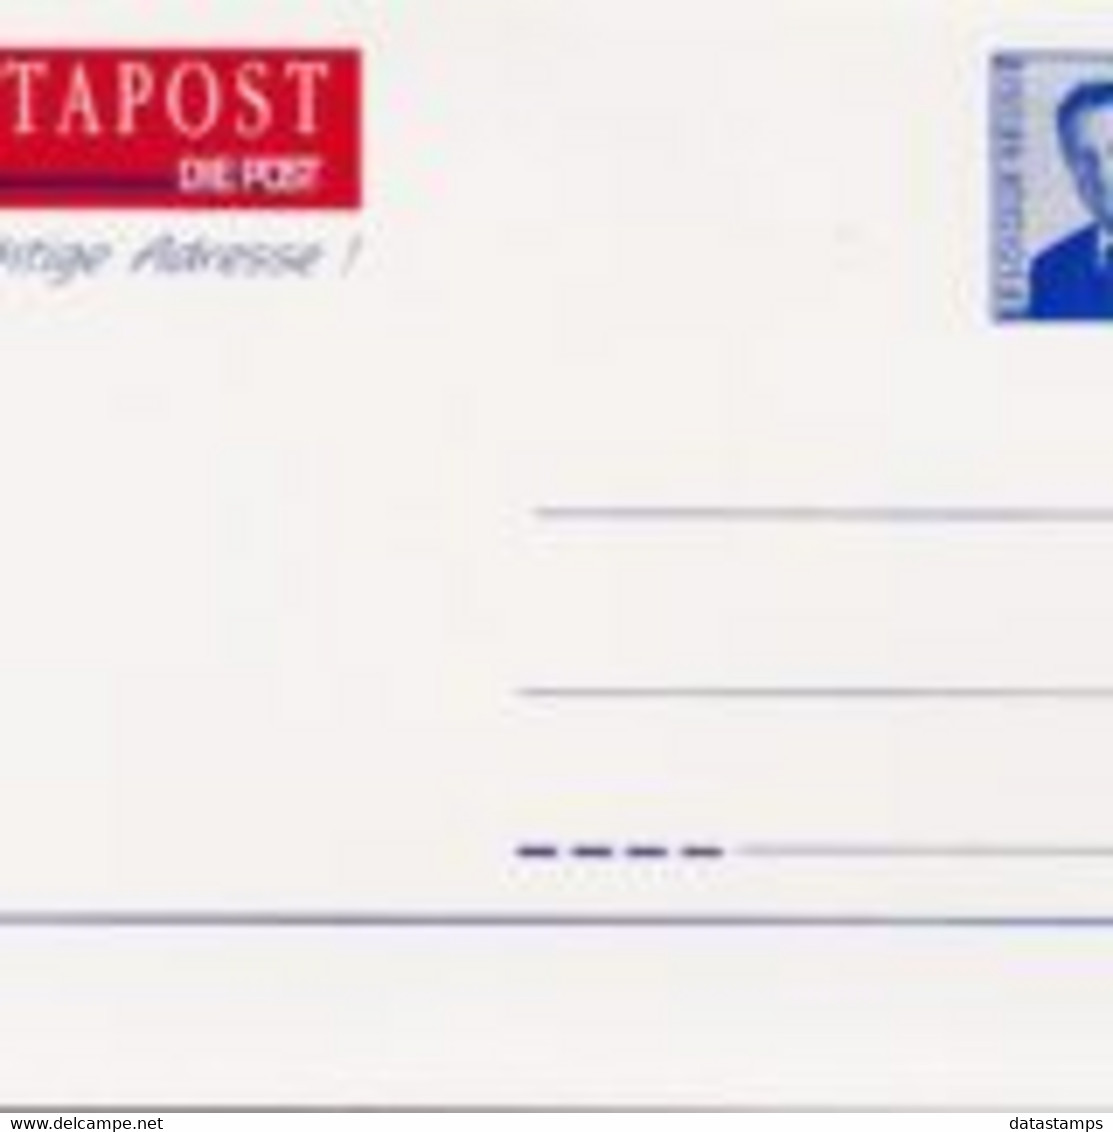 België 1996 - Postcard - XX - Address Change Mutapost - Avviso Cambiamento Indirizzo